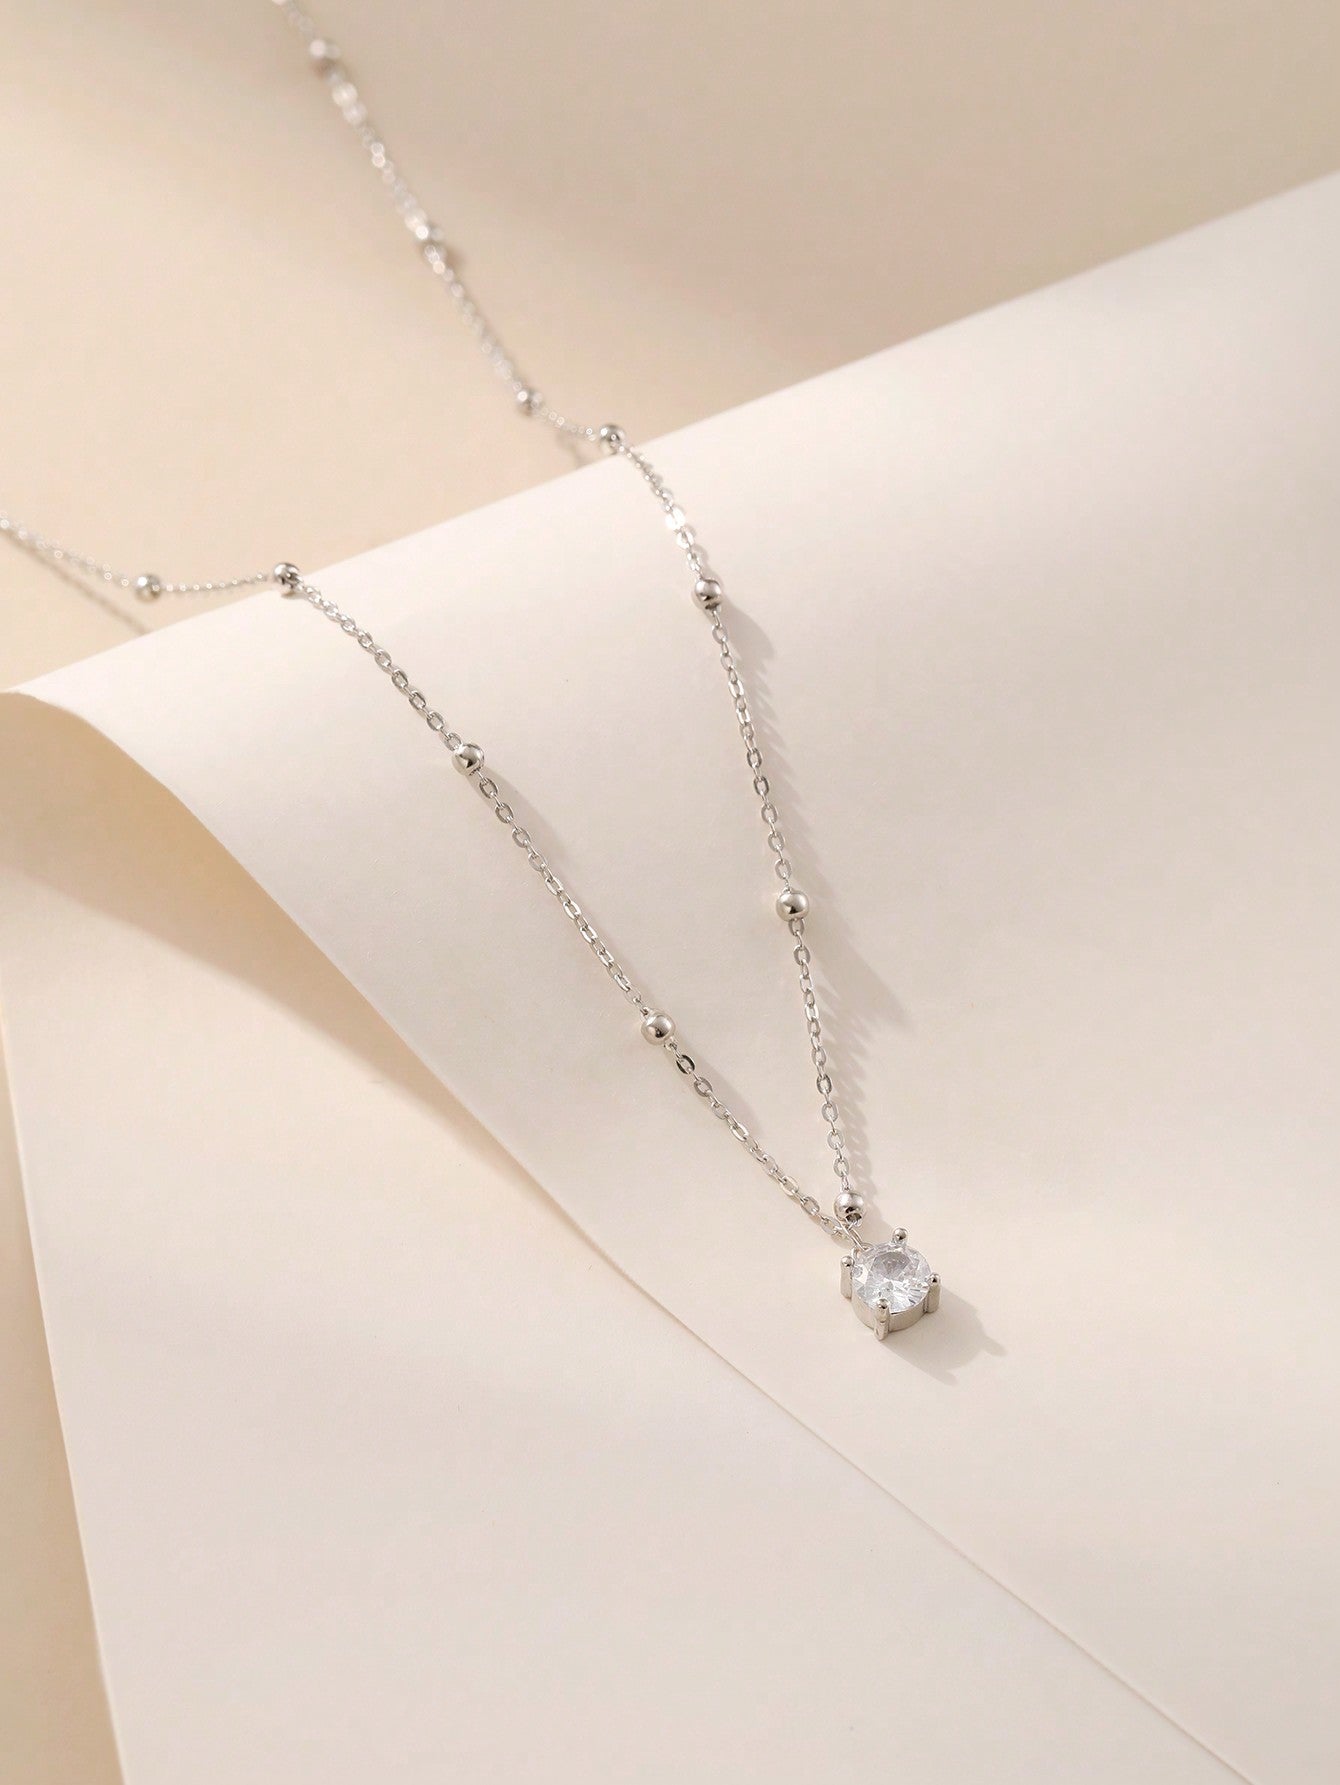 Glamorous Silver Cubic Zirconia Pendant Necklace: An Elegant Decoration for Women